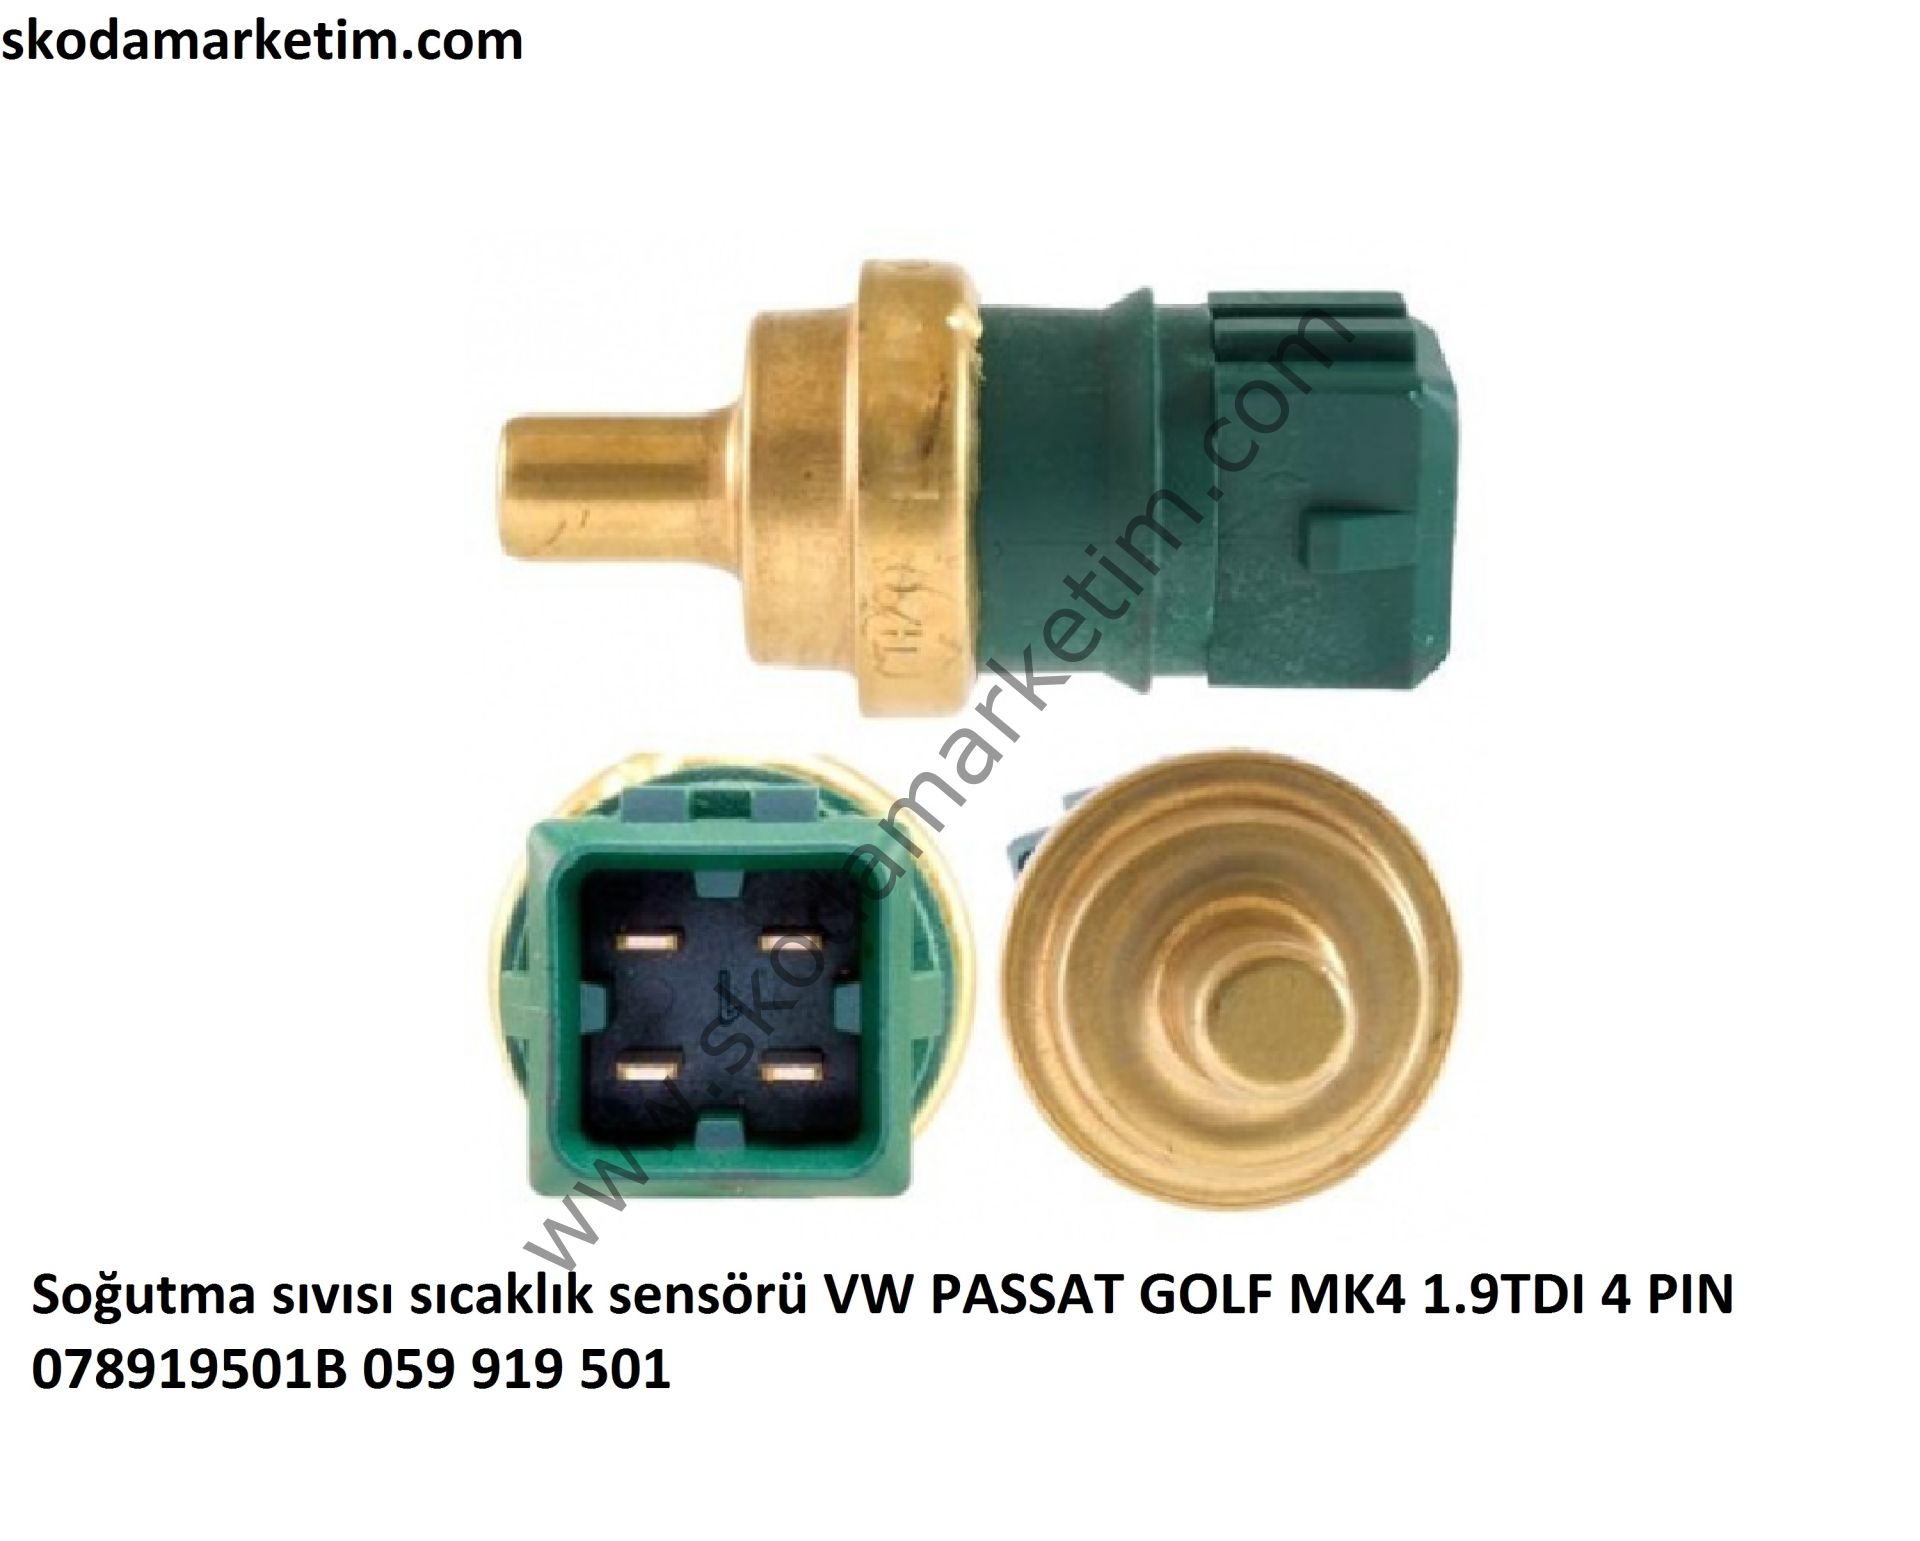 Soğutma sıvısı sıcaklık sensörü VW PASSAT GOLF MK4 1.9TDI 4 PIN 078919501B 059919501